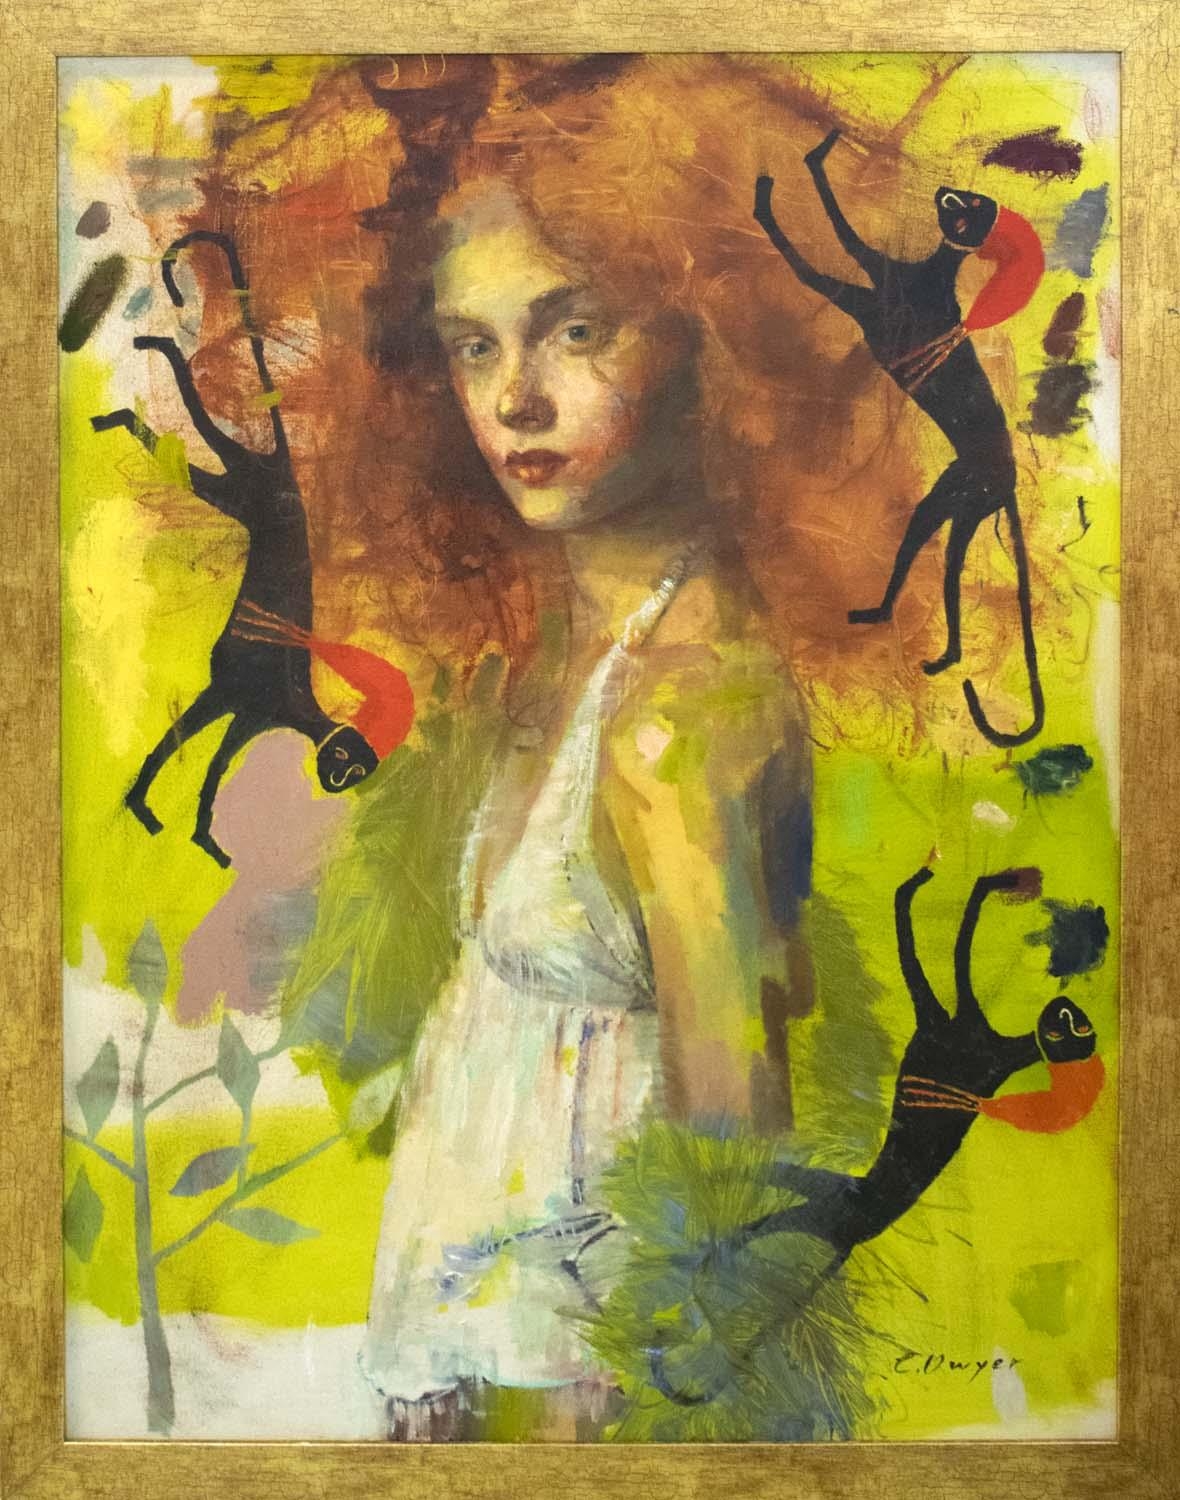 CHARLES DWYER (Contemporary American) 'Aphrodite's Dream', oil on canvas, 100cm H x 75cm W, framed.